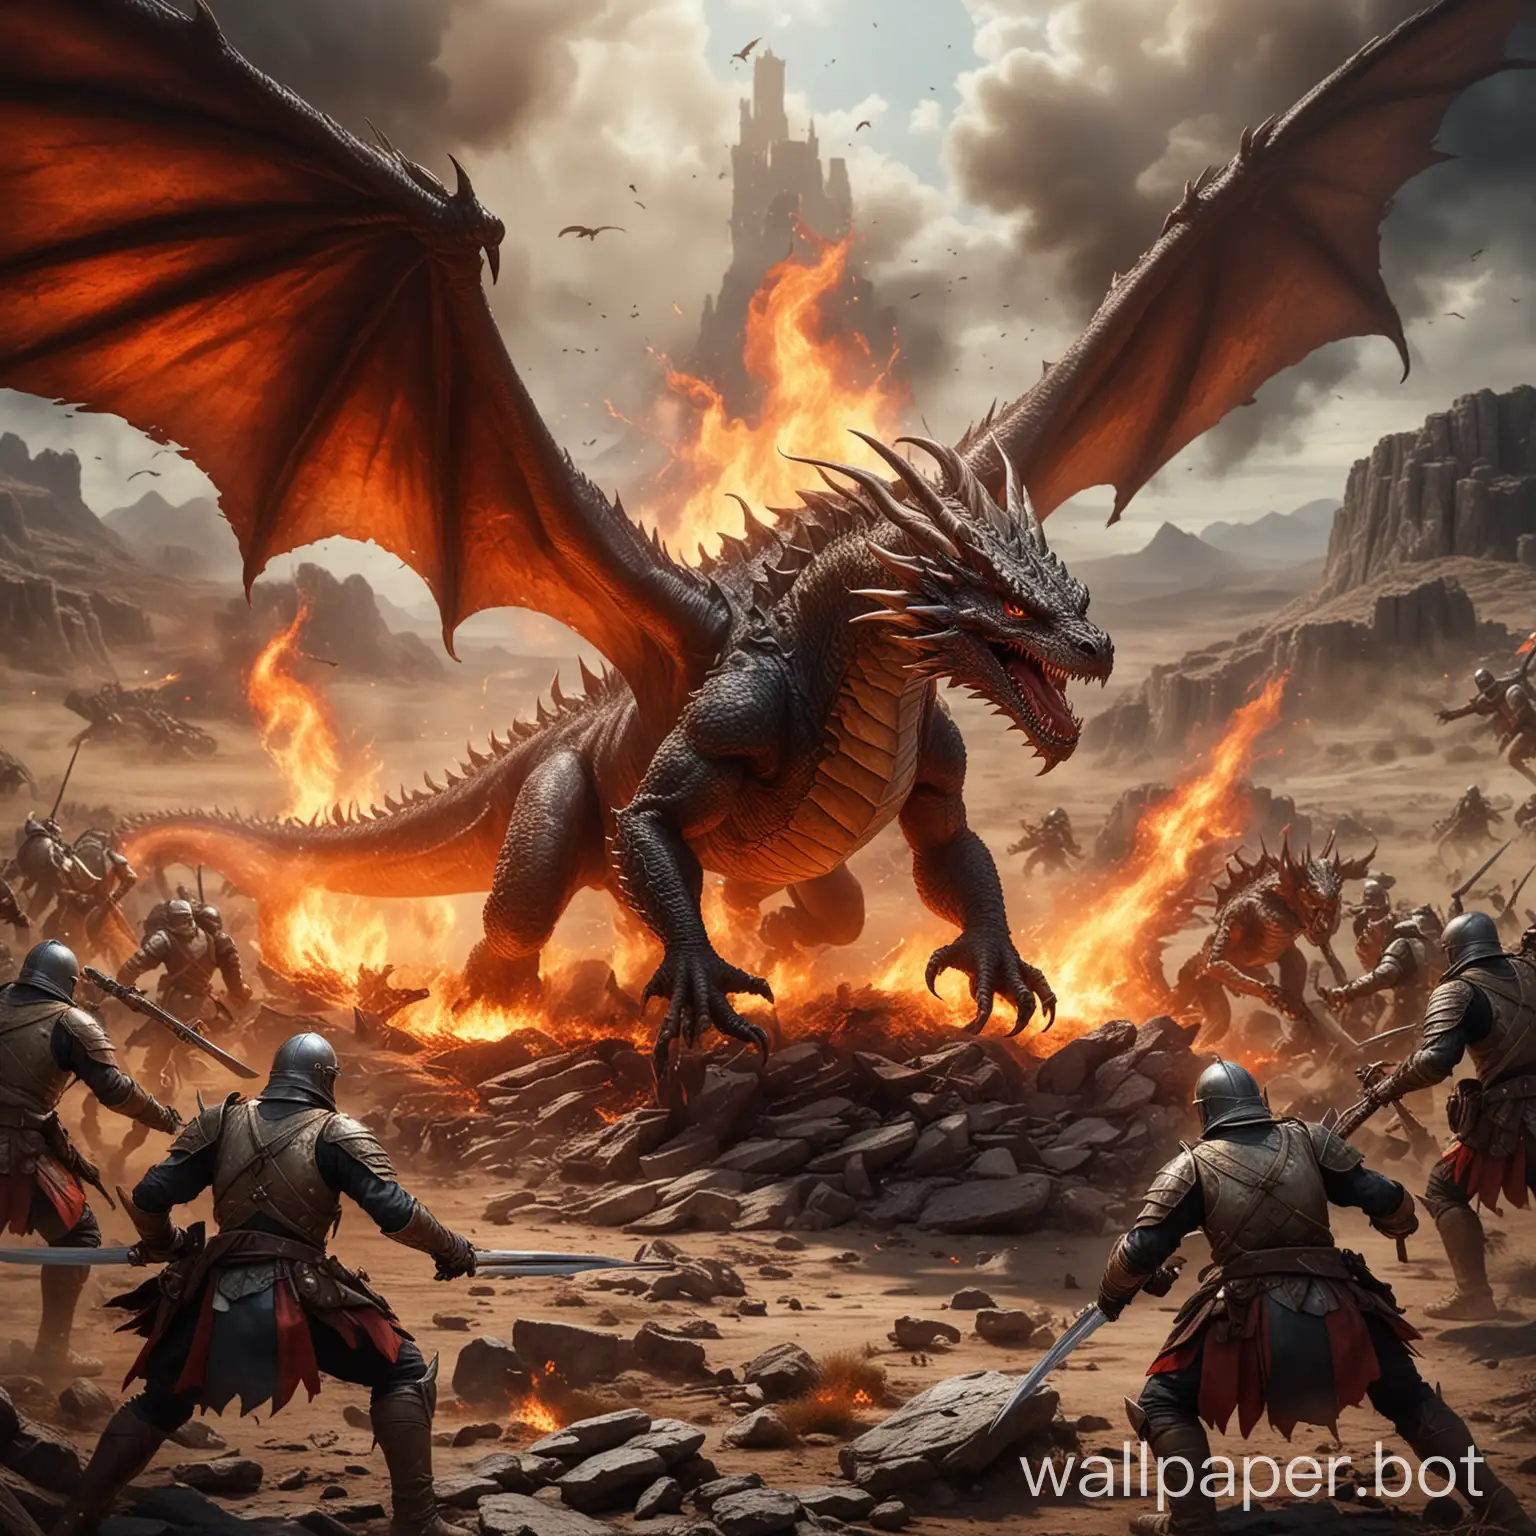 Battlefield-Encounter-Western-Fire-Dragon-vs-Soldiers-in-Epic-Clash